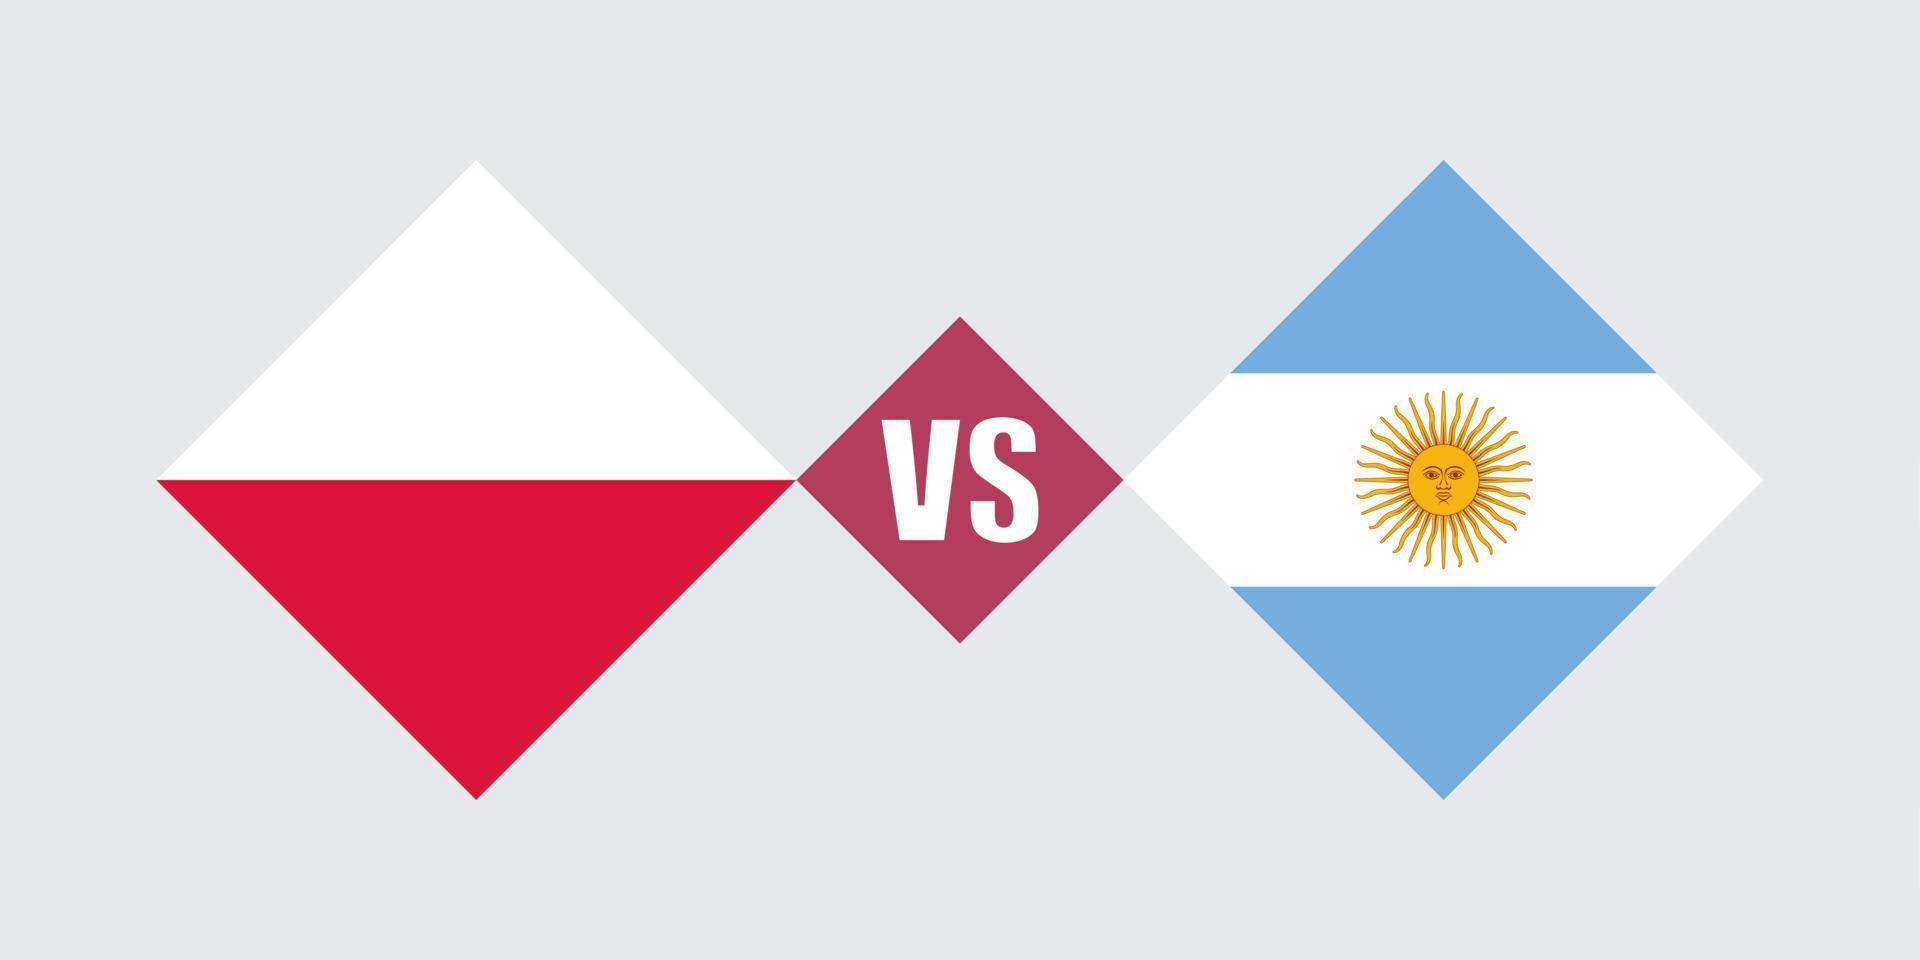 Poland vs Argentina flag concept. Vector illustration.